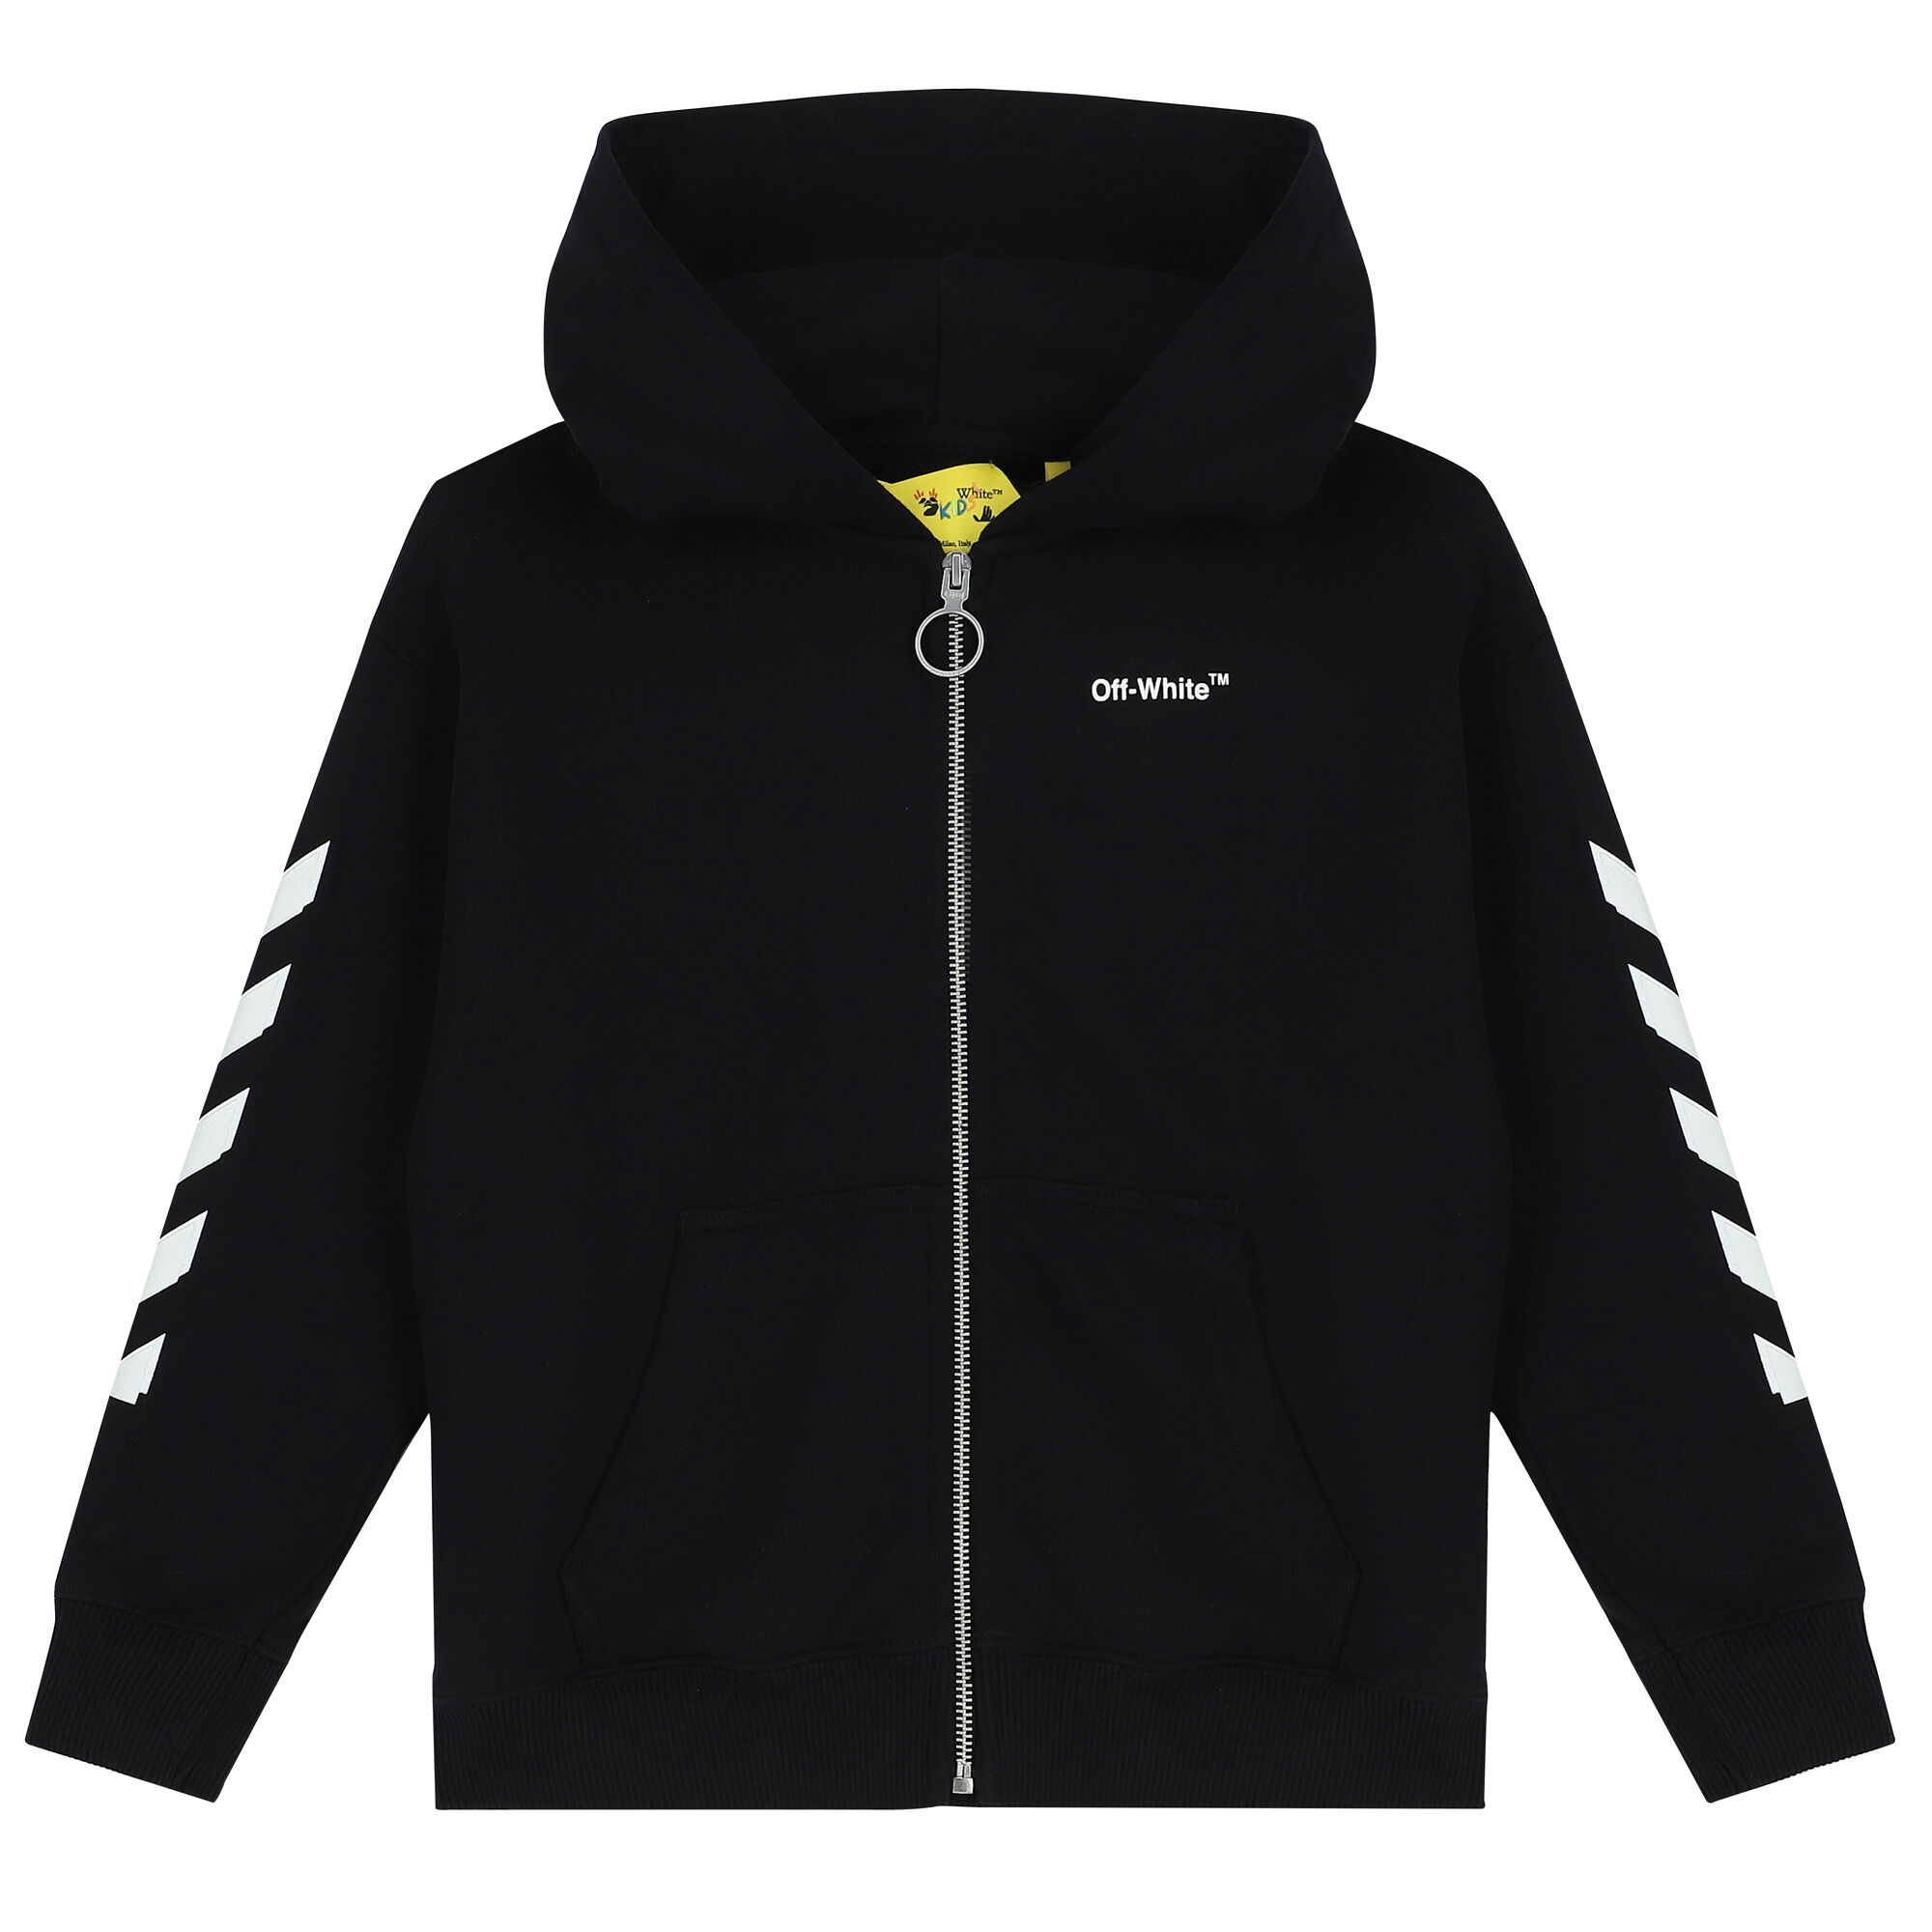 Calvin Klein Kids logo-print jersey hoodie - Black